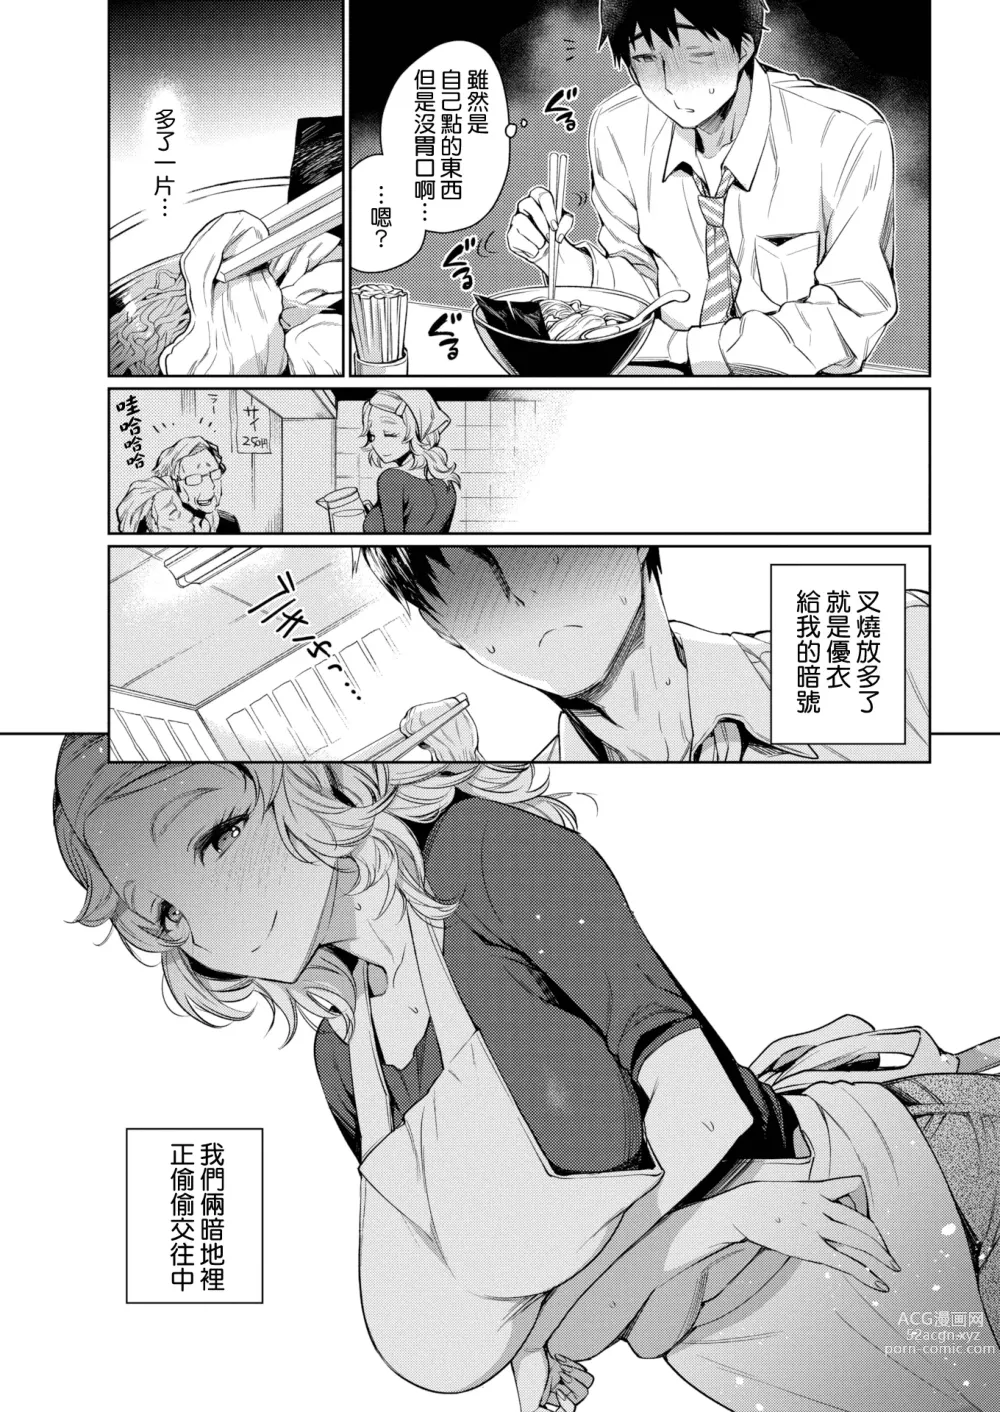 Page 3 of manga Okawari o Douzo